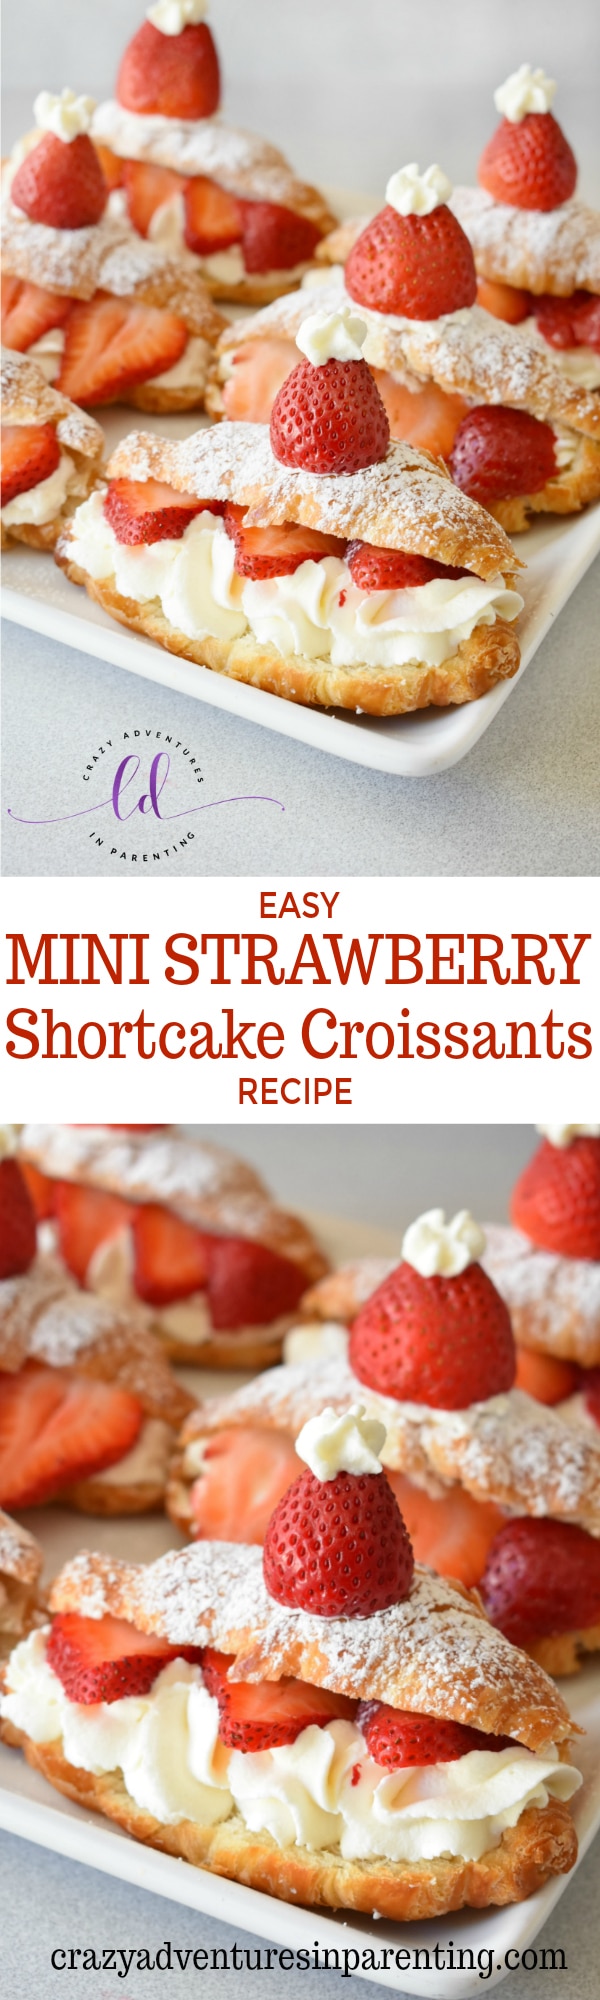 Easy Mini Strawberry Shortcake Croissants Recipe